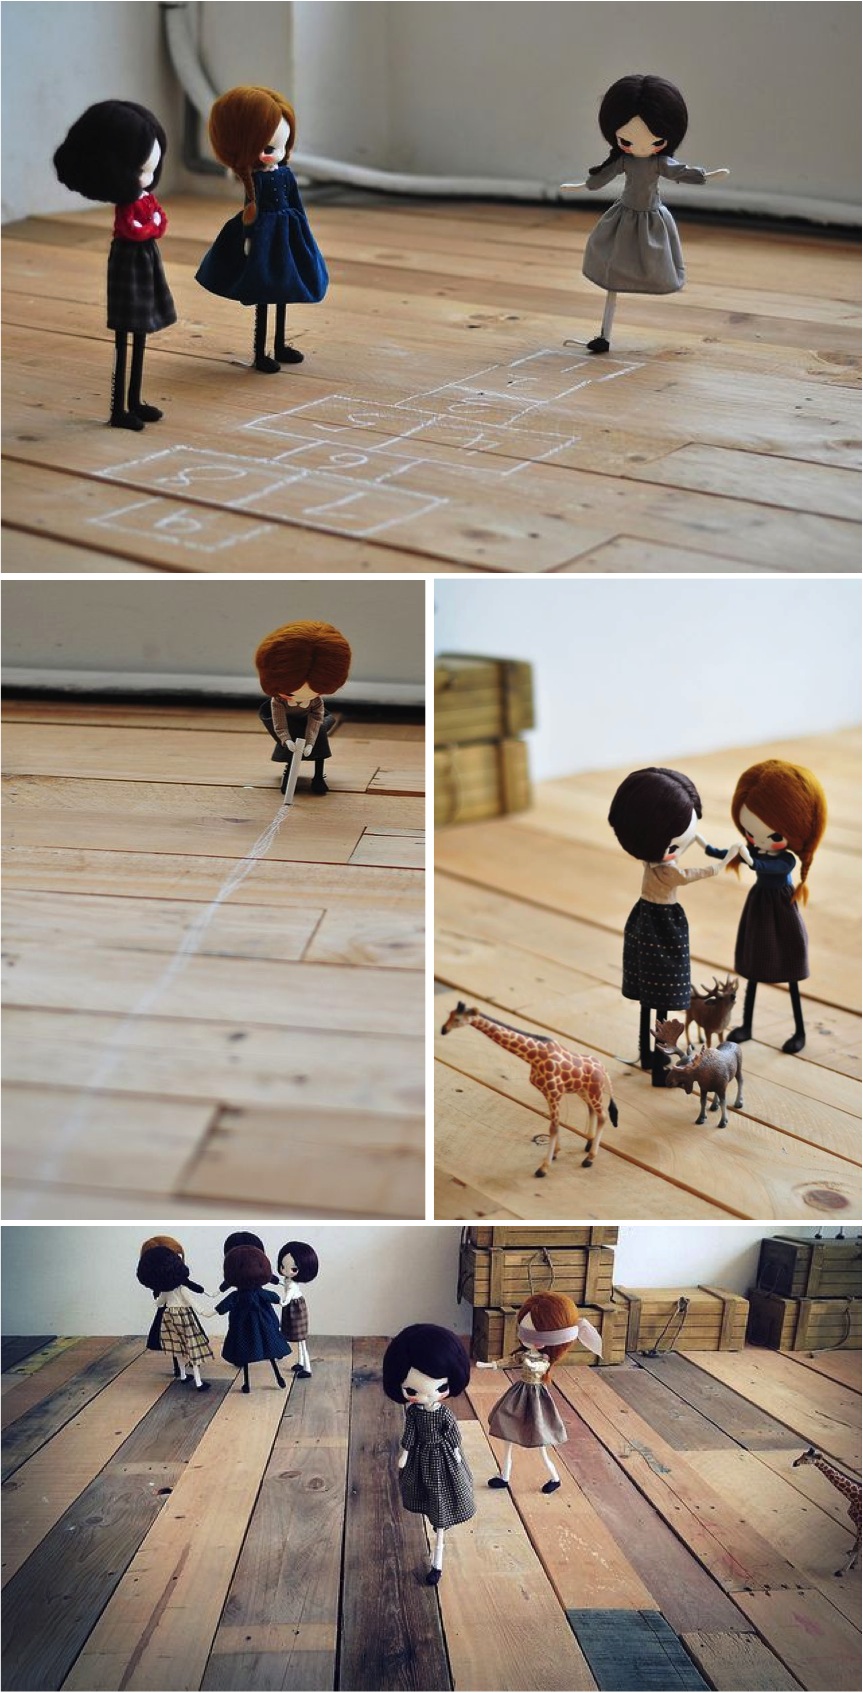 "handmade dolls exhibition"